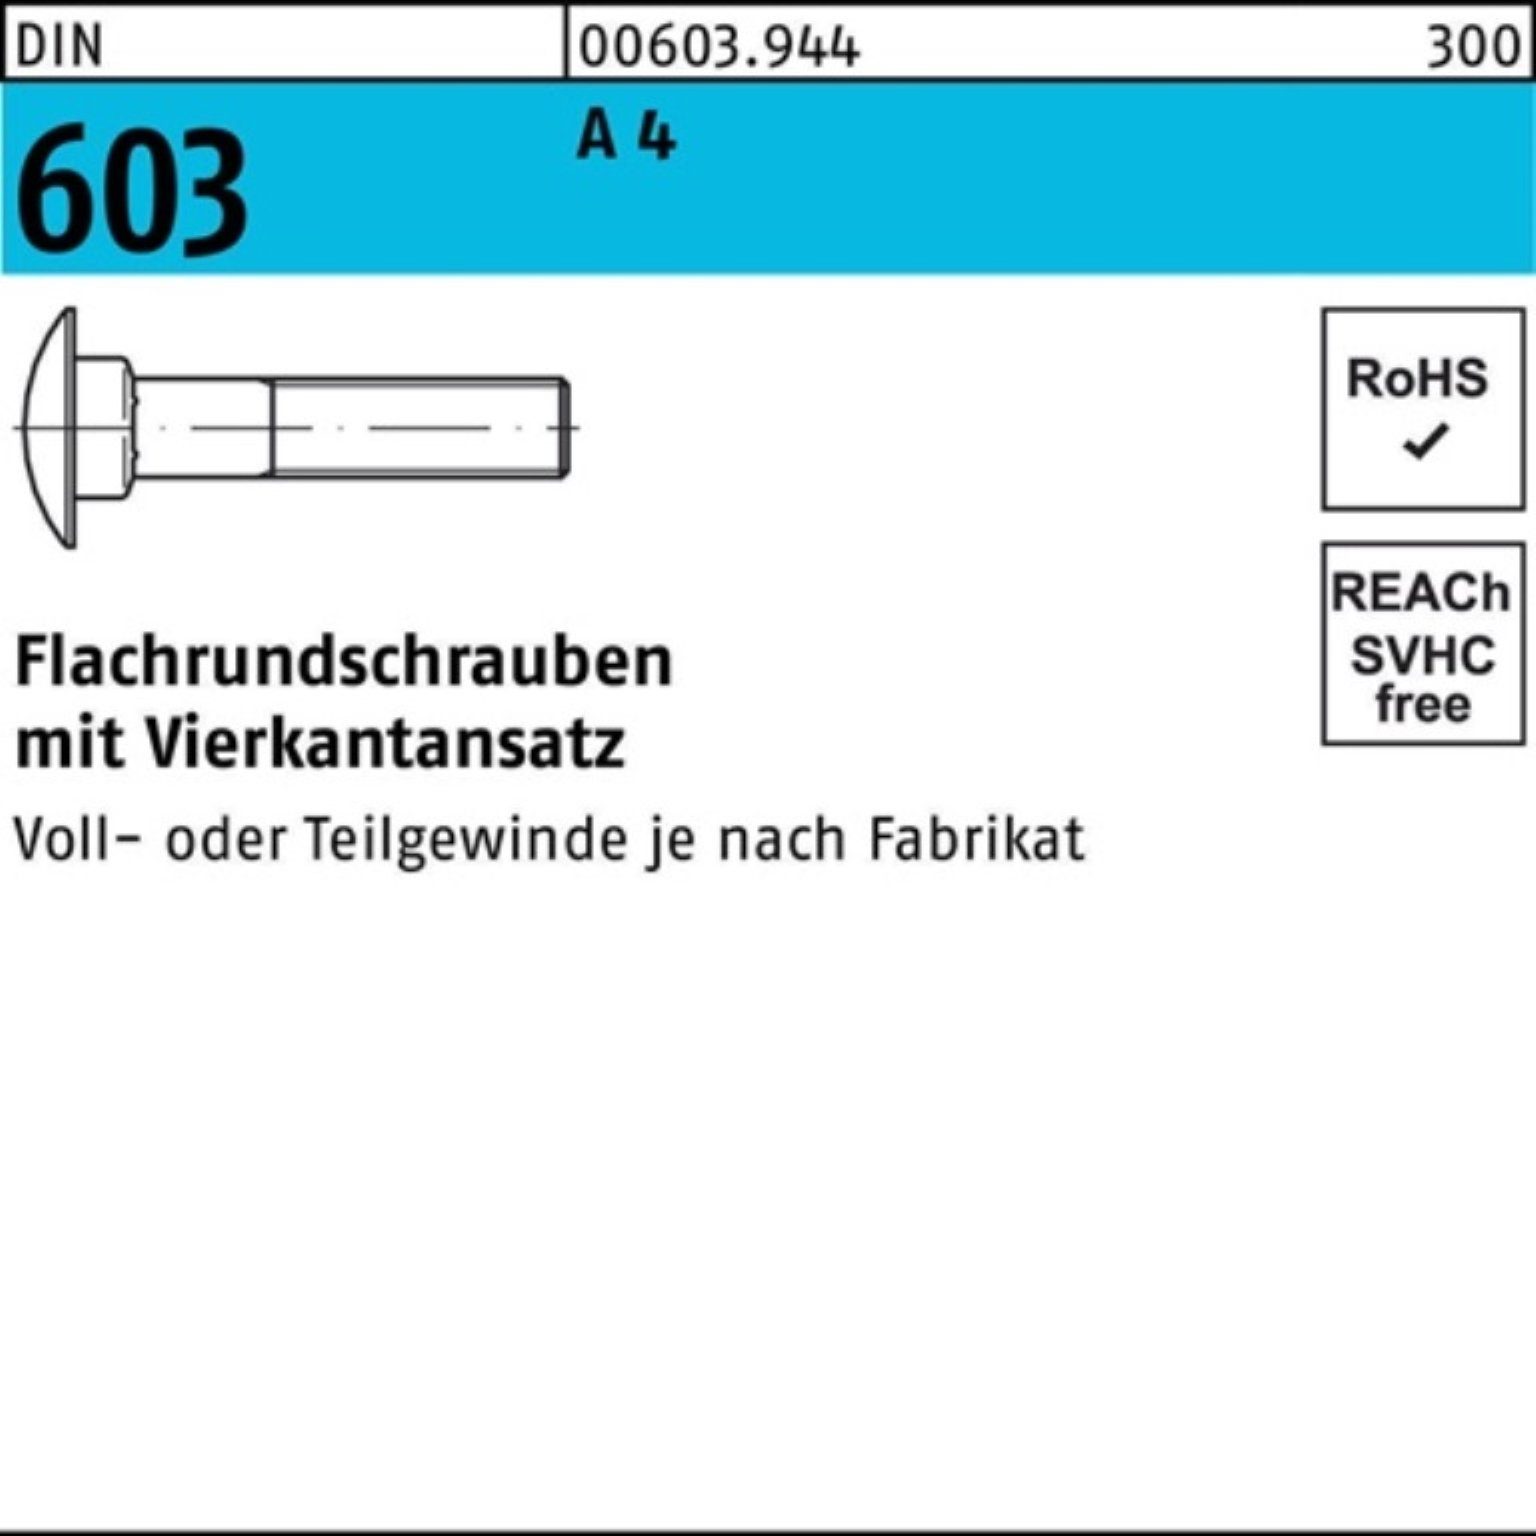 Reyher Schraube 100er Pack Flachrundschraube DIN 603 Vierkantansatz M8x 100 A 4 10 St